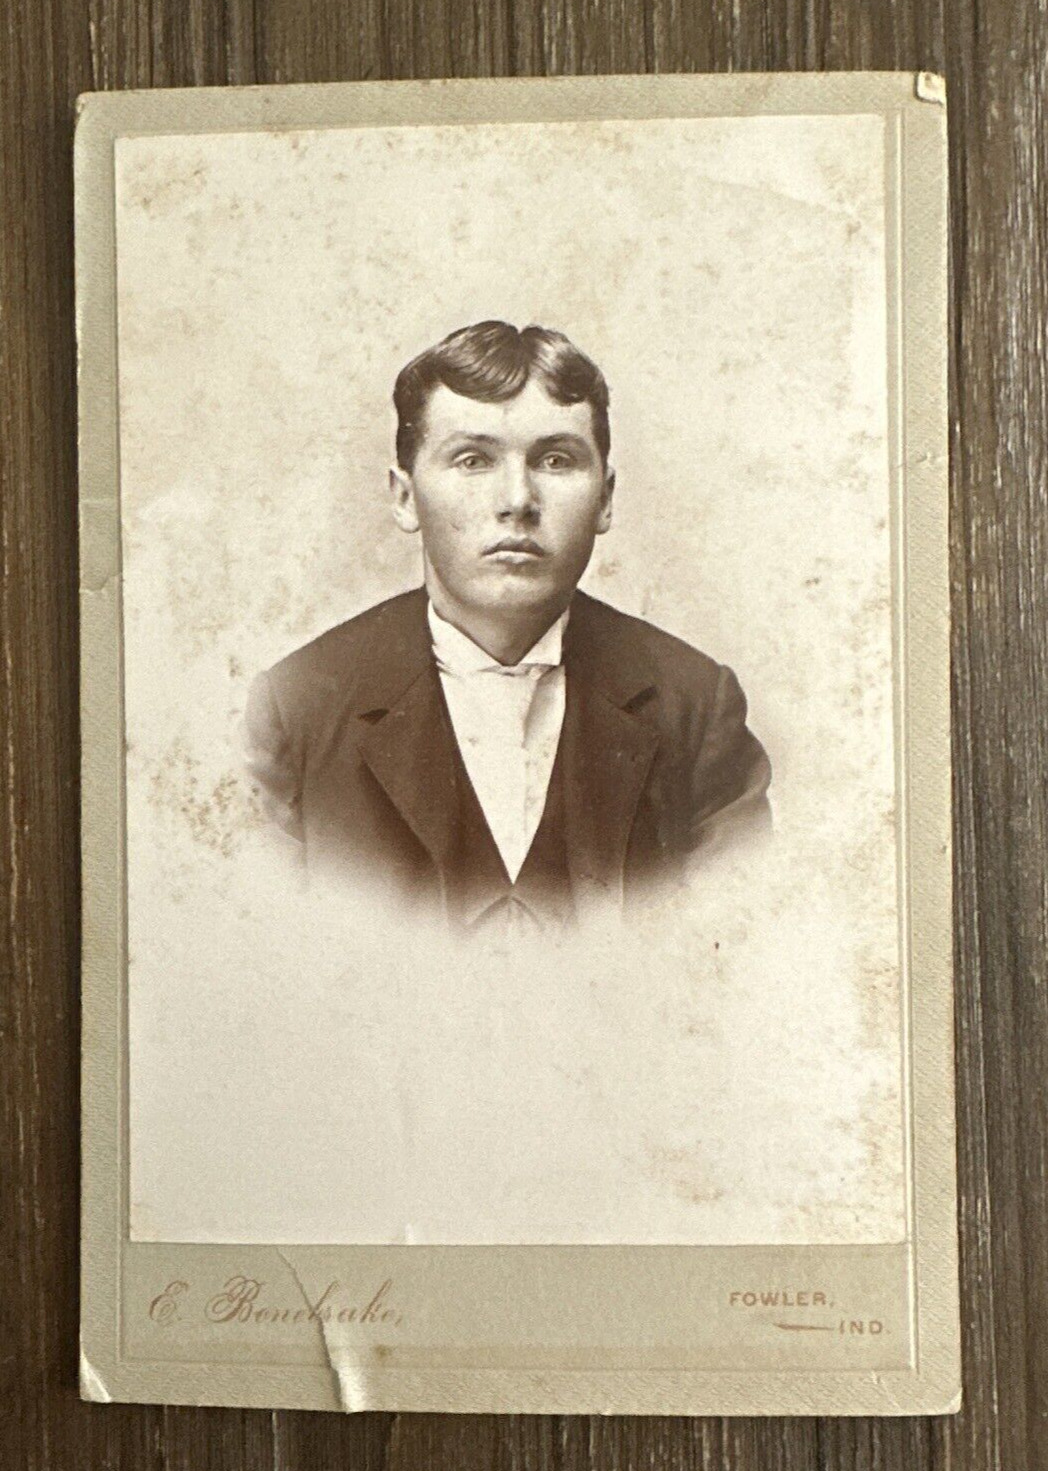 Antique Cabinet Card Photo Young Man E Bonebrake Fowler Indiana Aging Spots READ